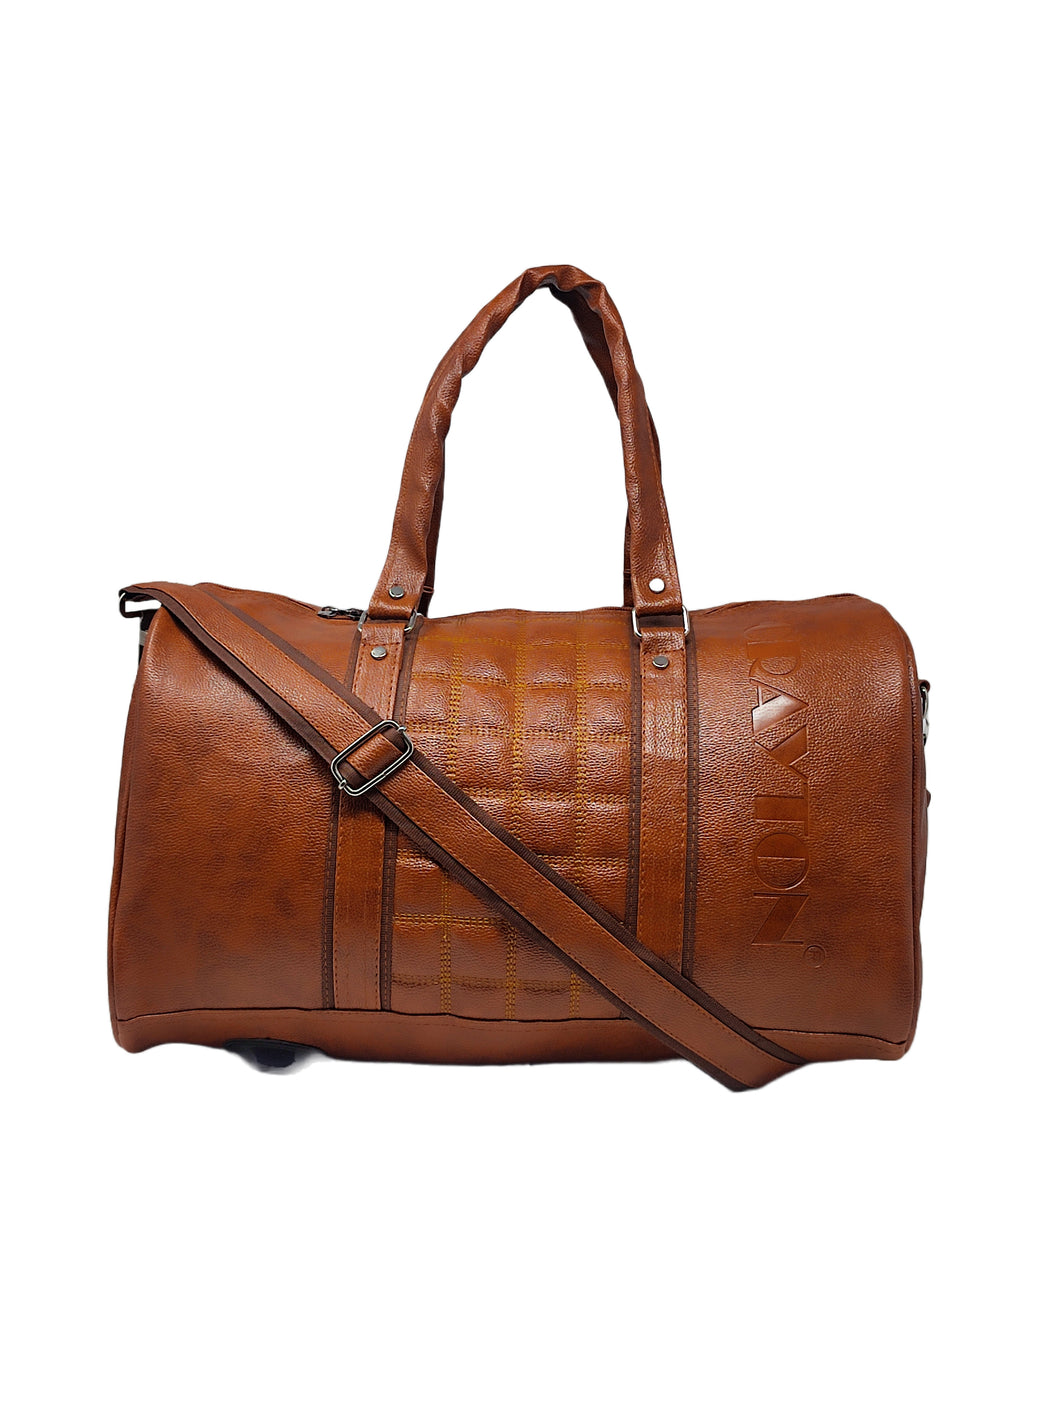 Crayton PU Leather Tan Duffel Bag for Men and Women